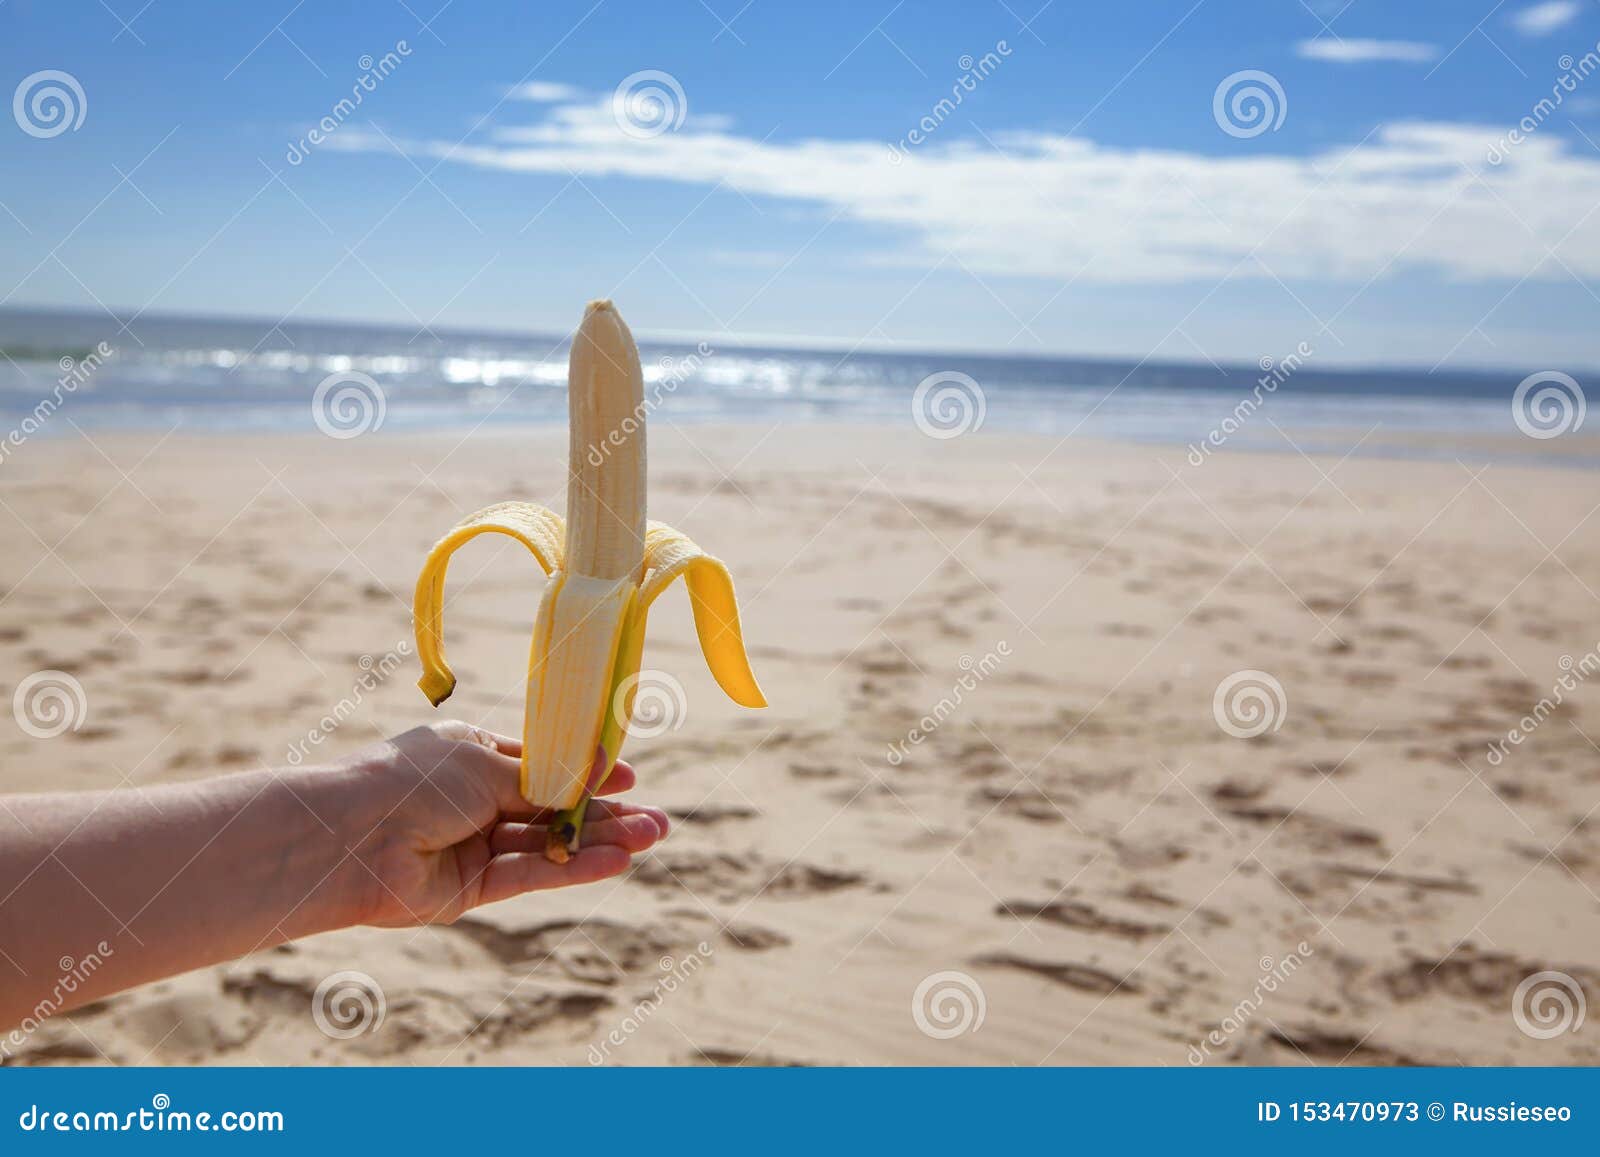 on the beach with banana